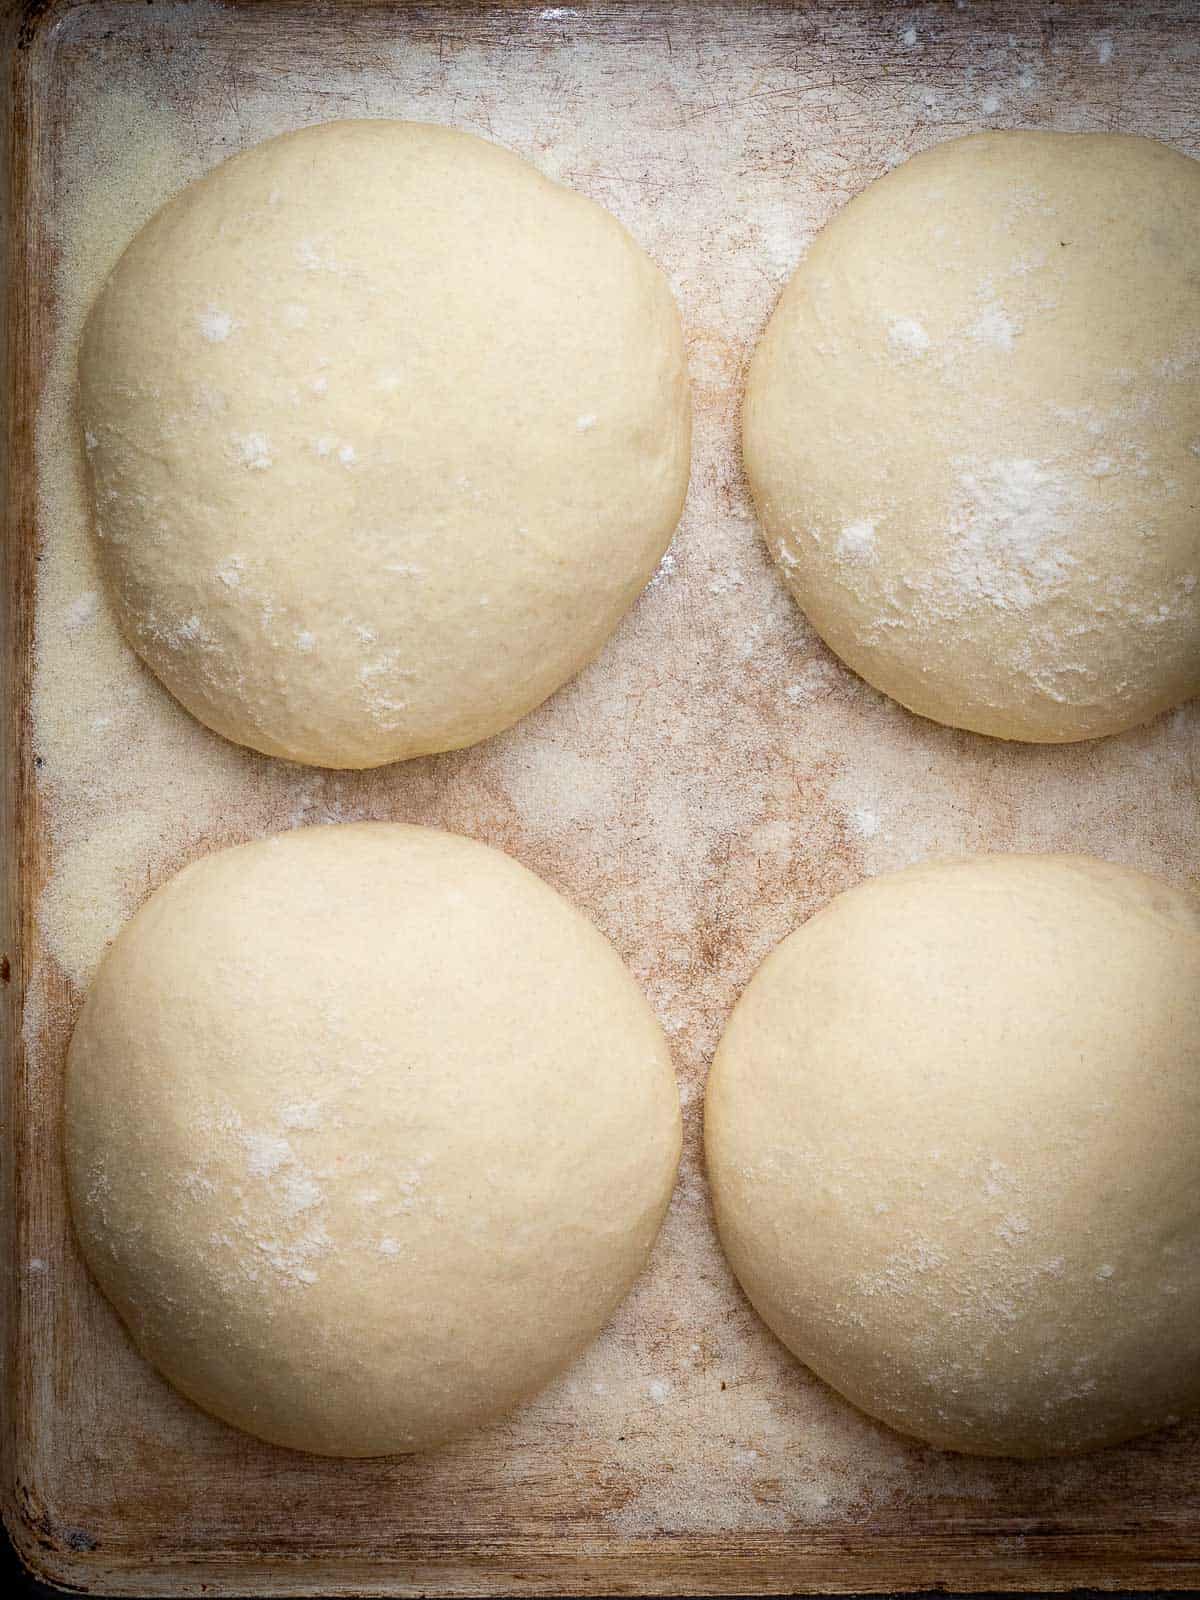 for balls of vegan pizza dough proofing.